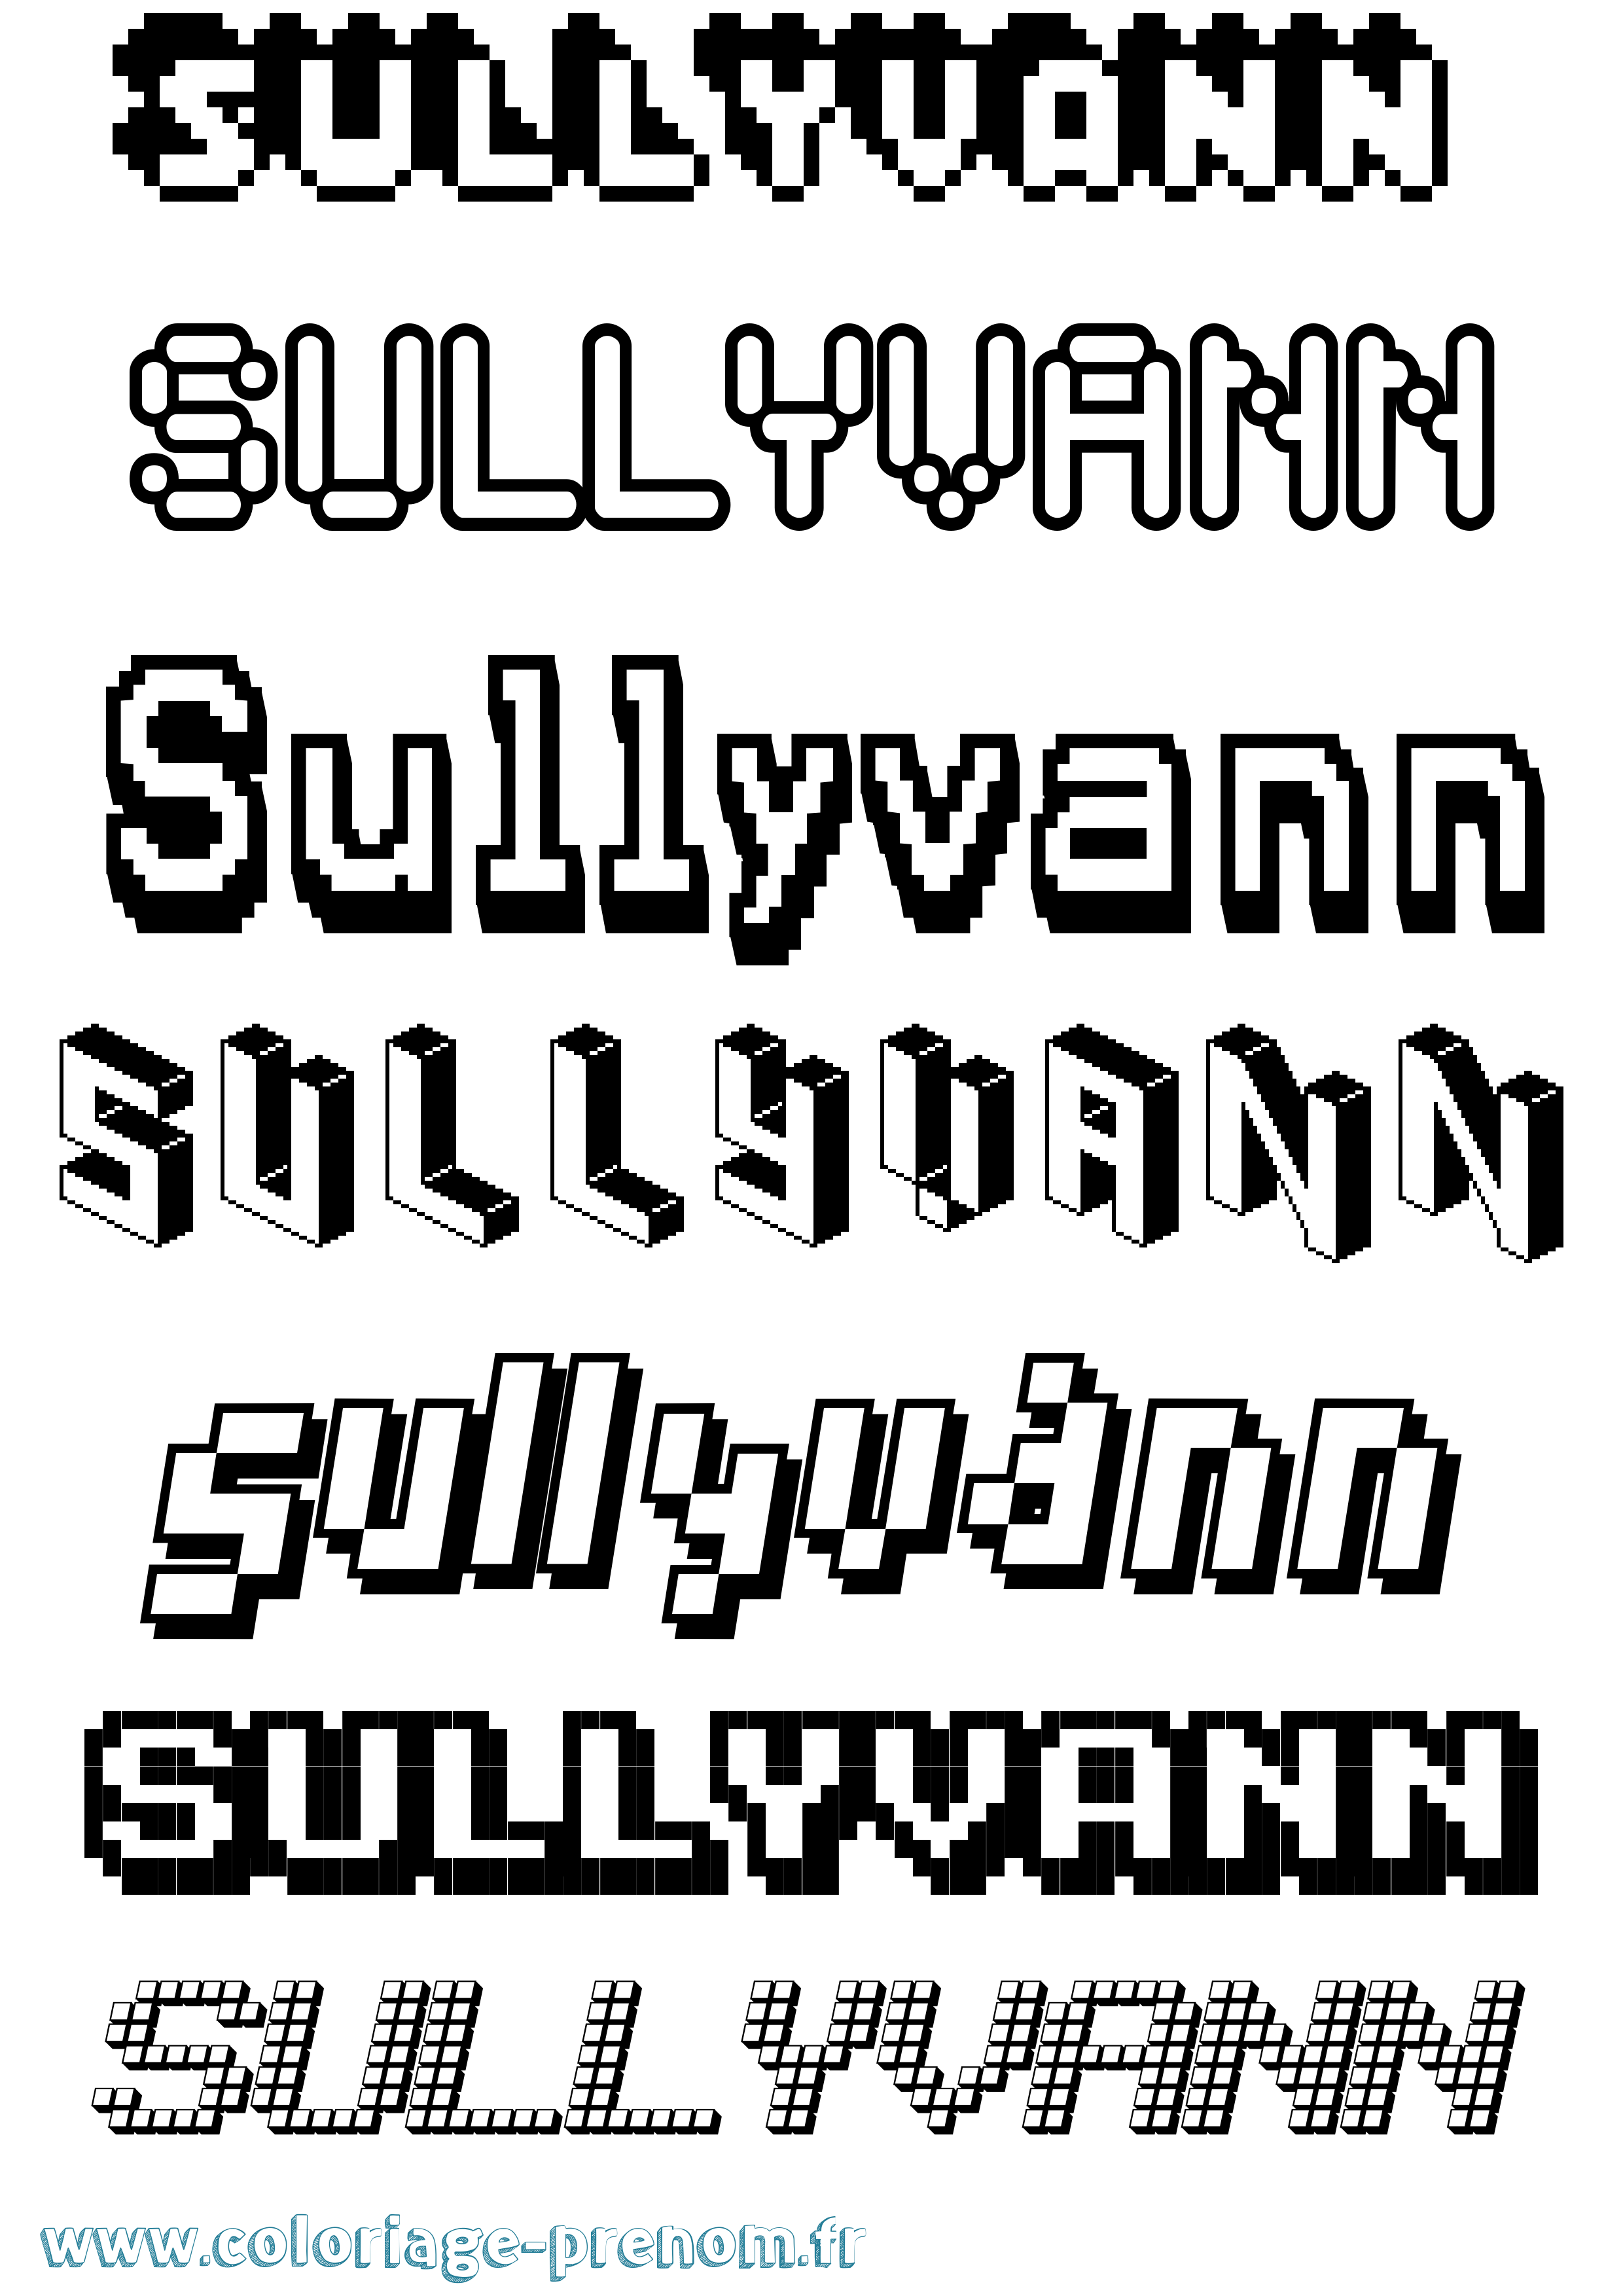 Coloriage prénom Sullyvann Pixel